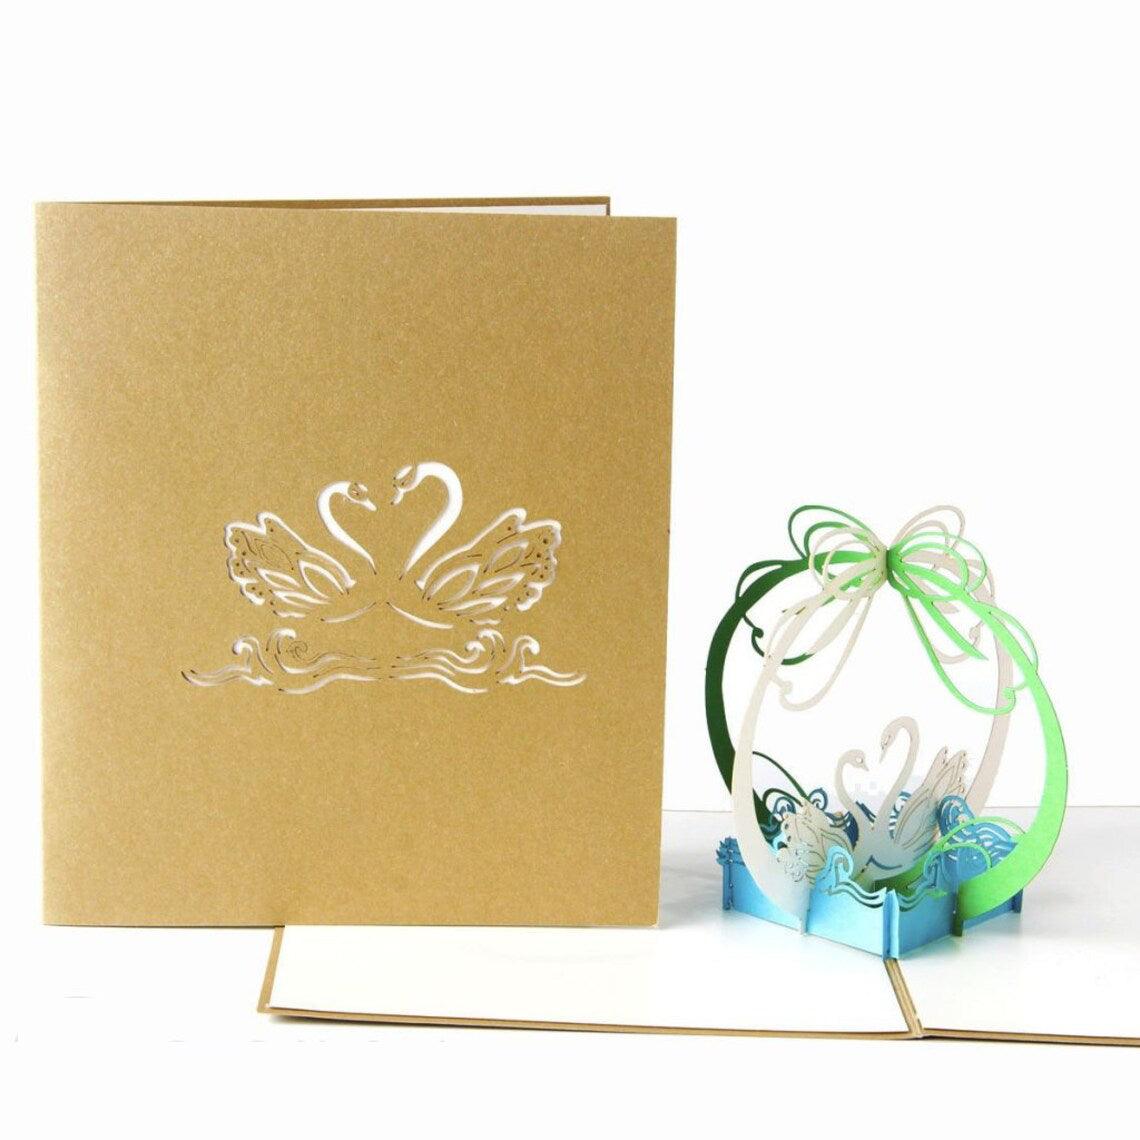 Handmade 3D Pop-Up Card with White Swan Design - Lasercutwraps Shop